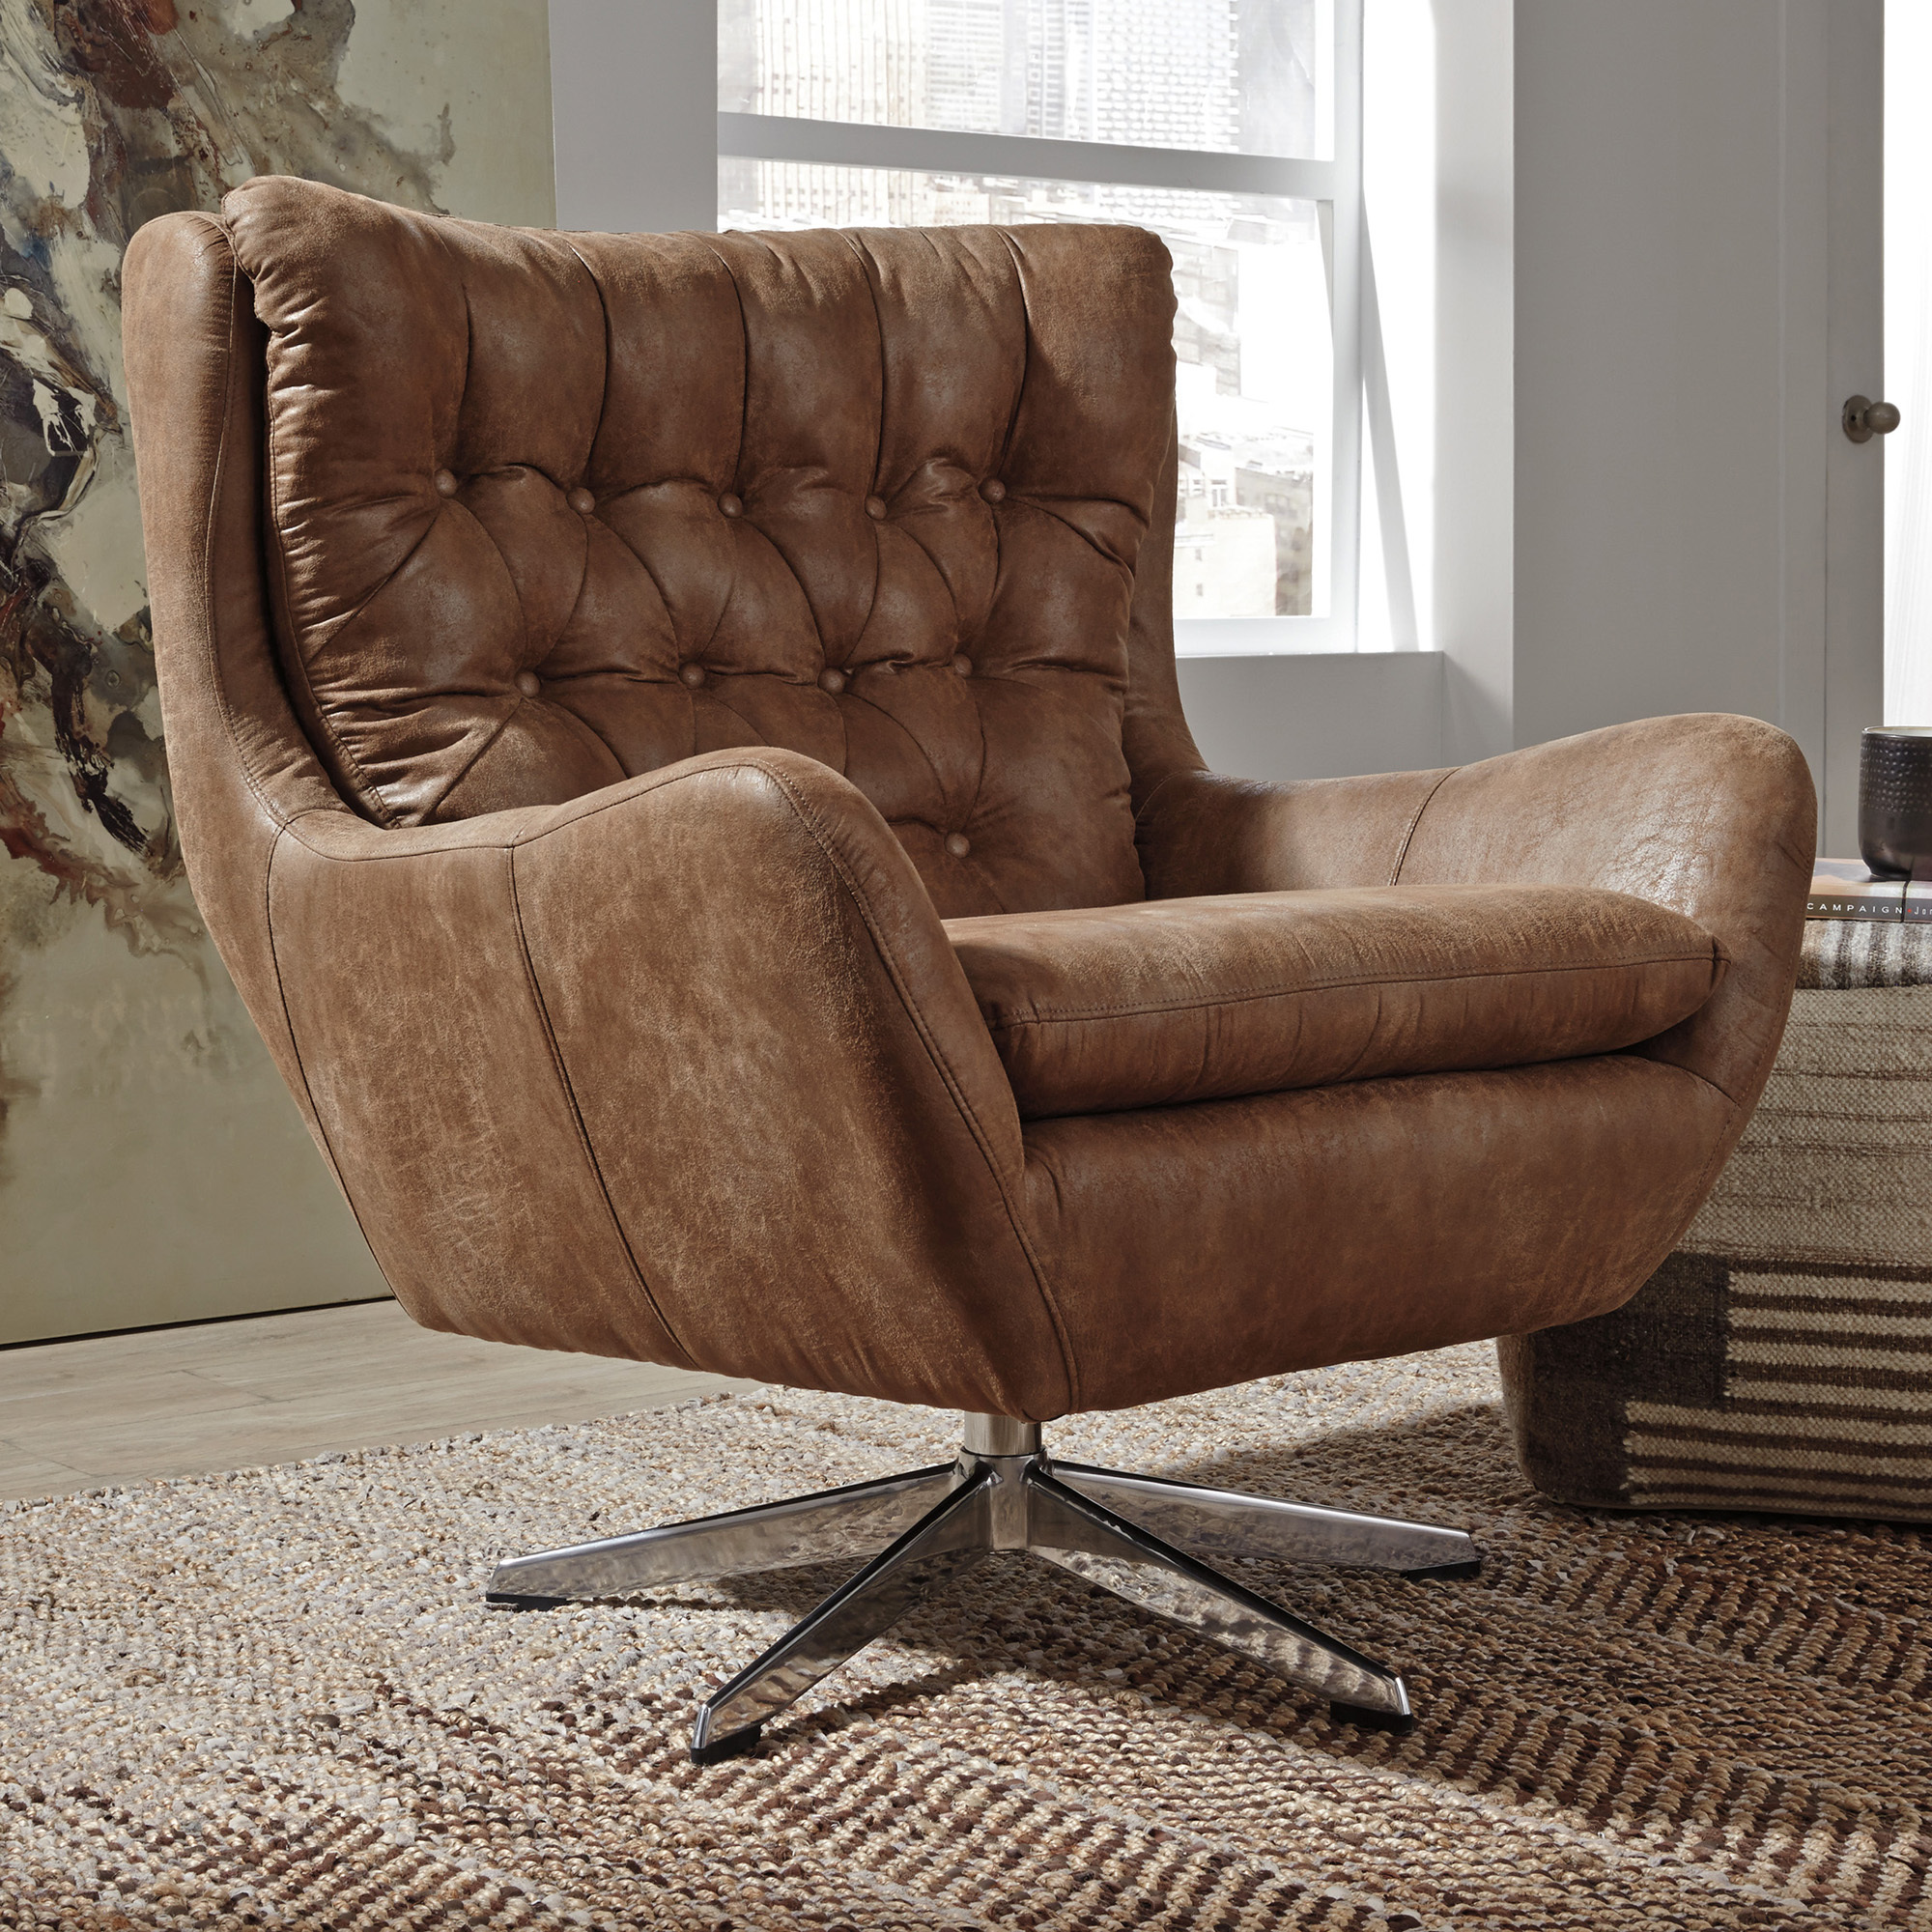 Anita Design Living Brown Venia Faux, Faux Leather Swivel Chair Living Room